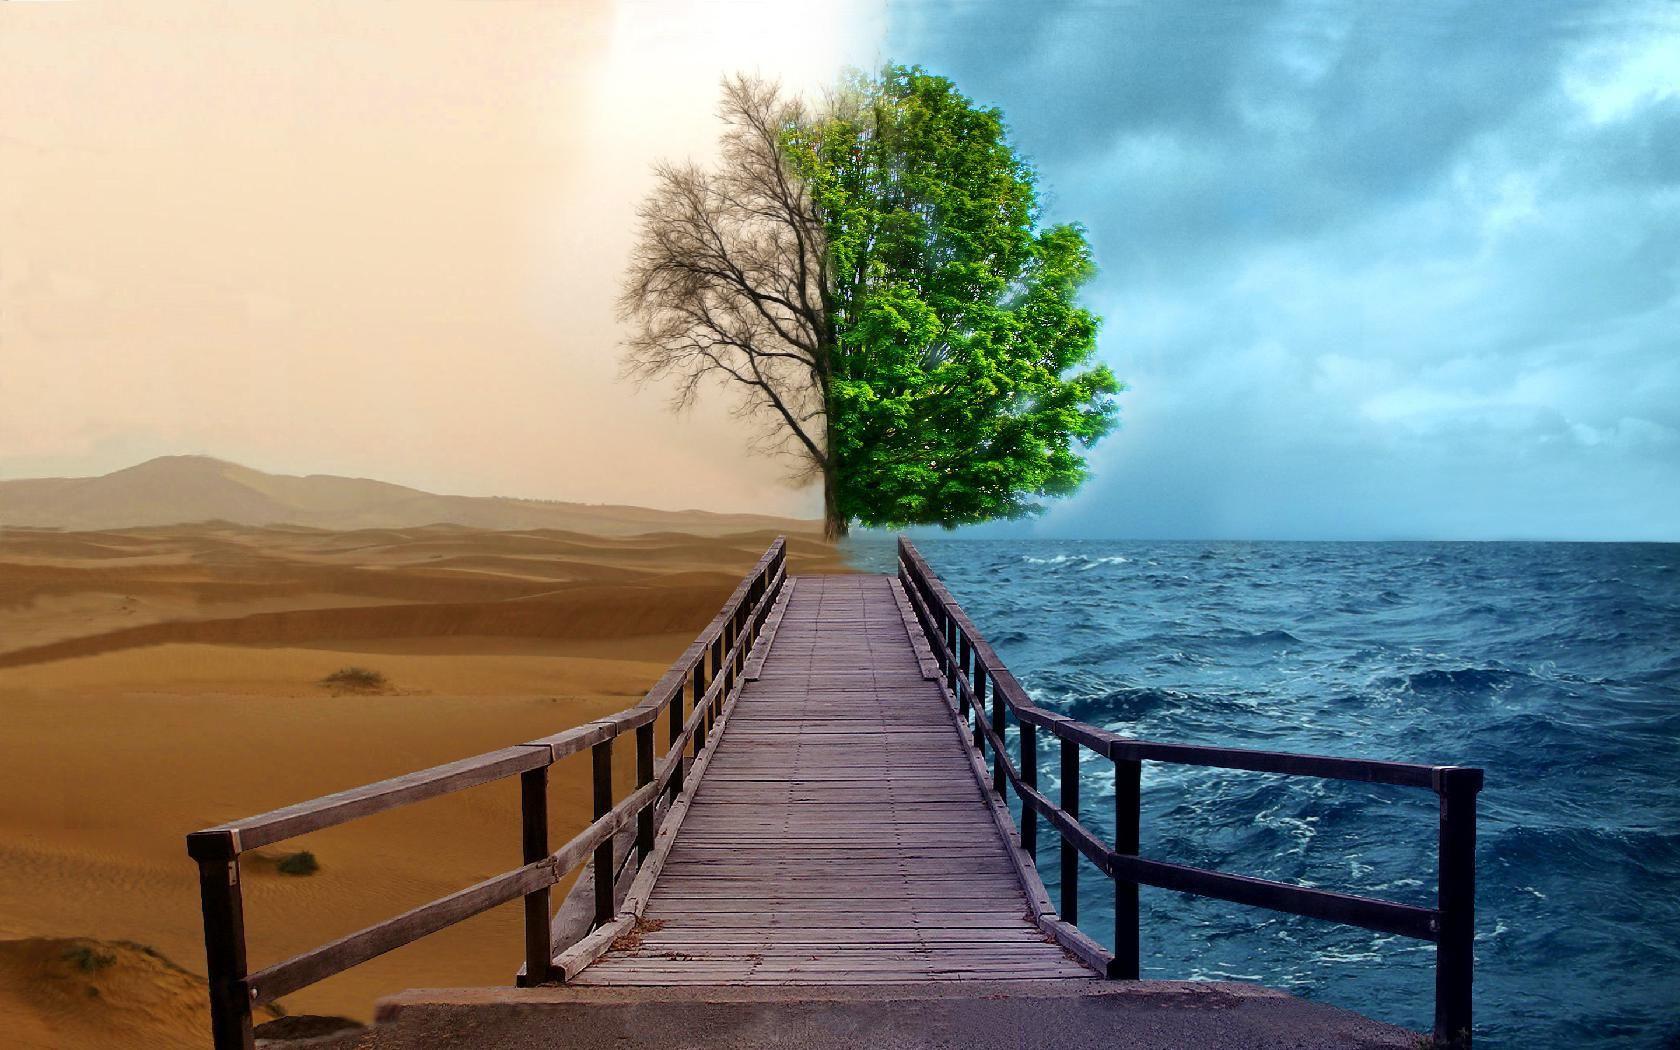 trees, landscapes, ocean, photo manipulation, sea, bridges